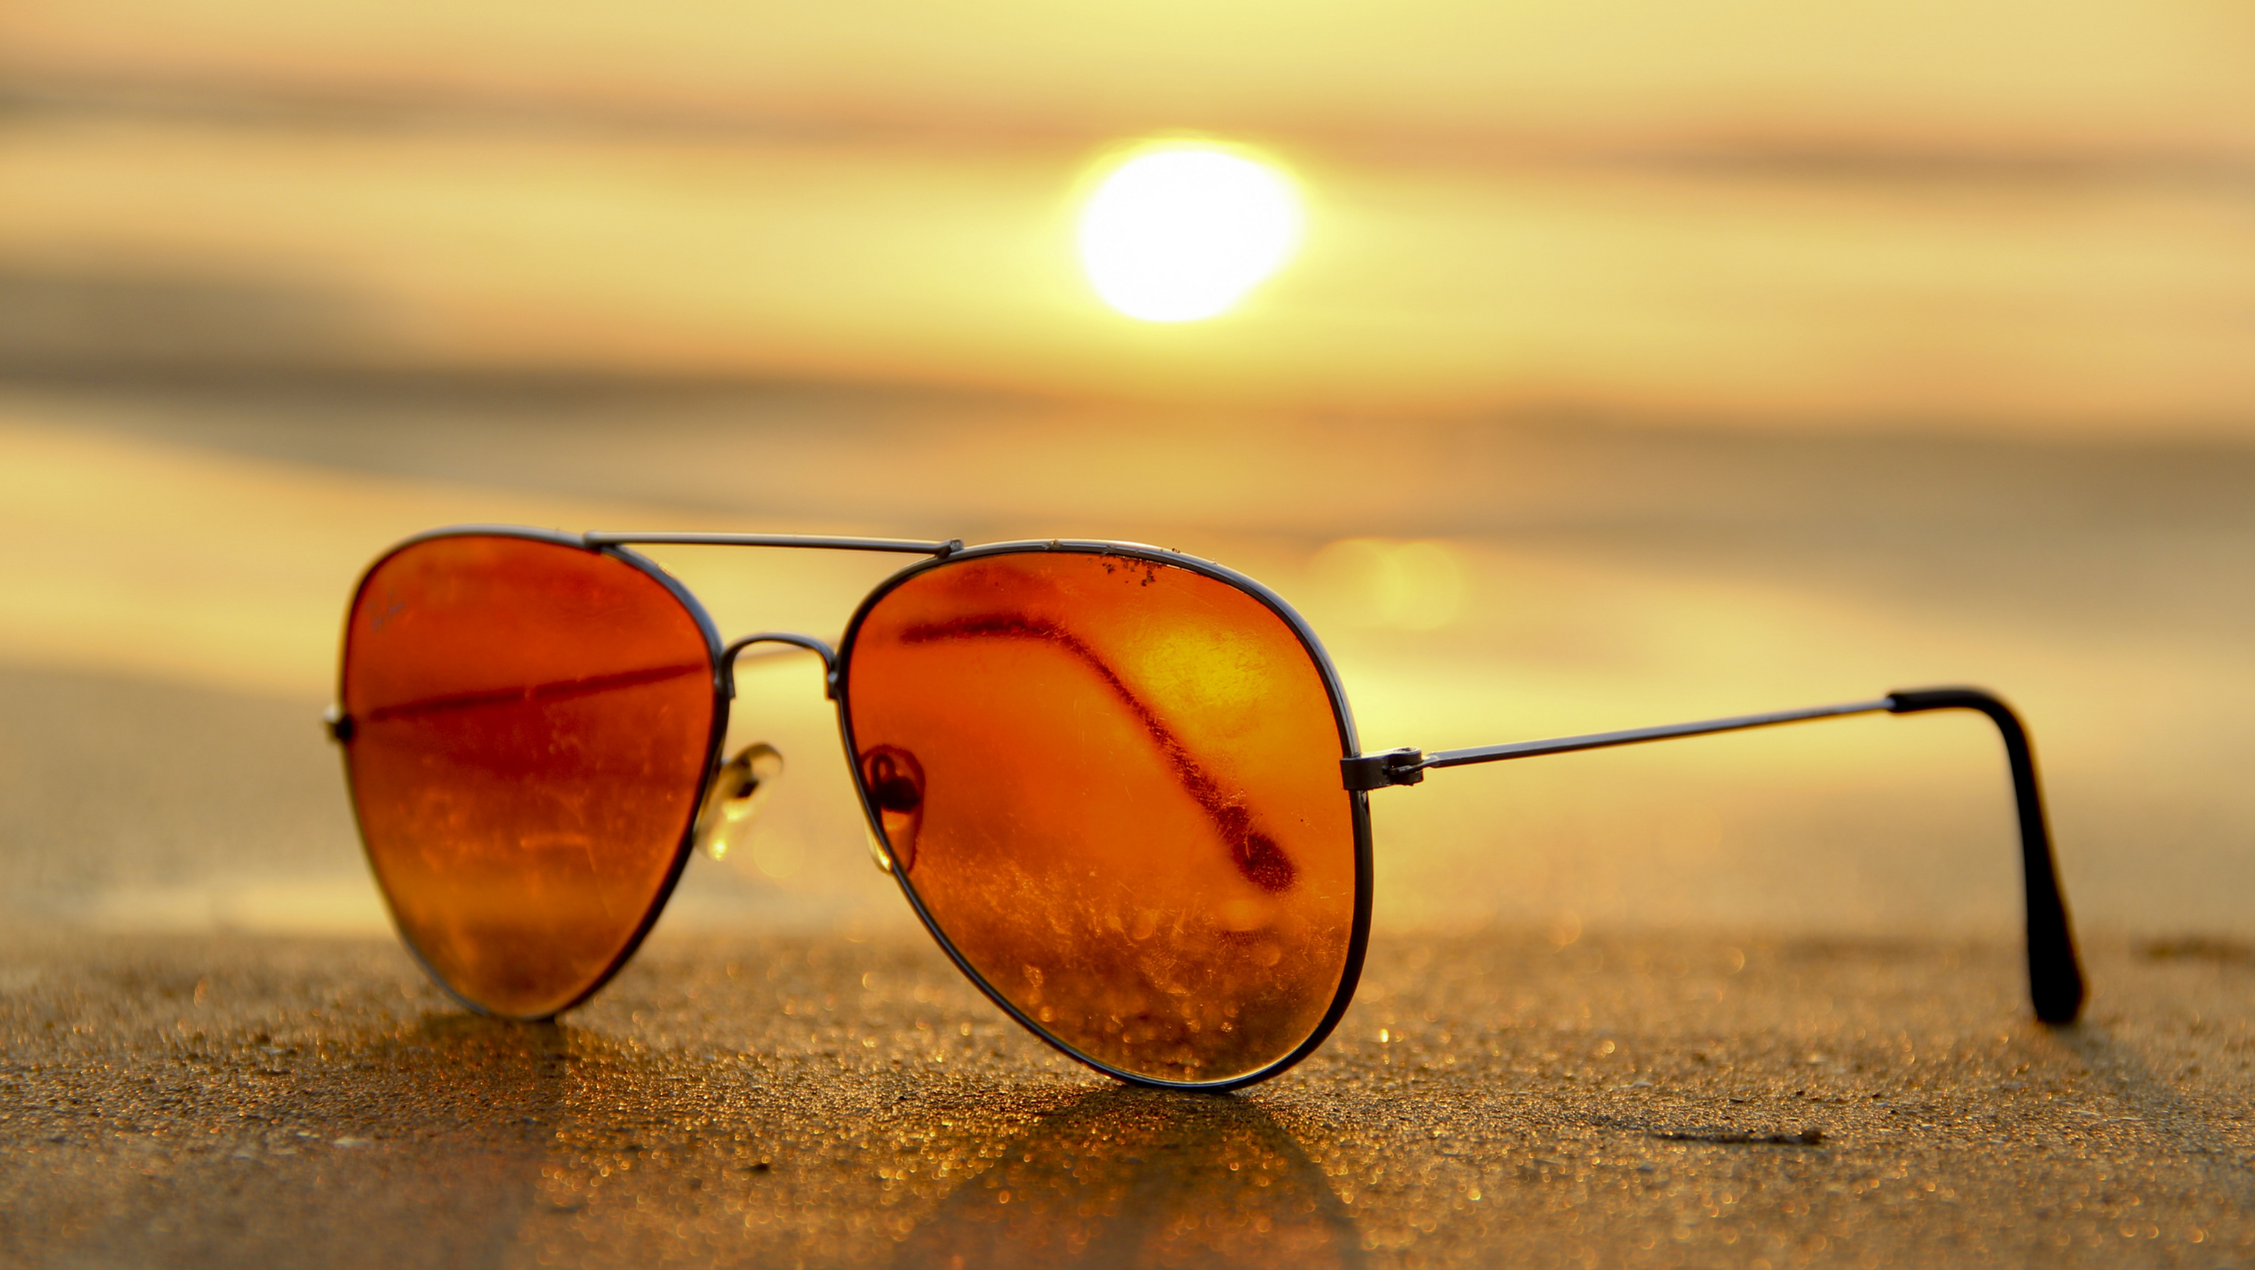 Sunglasses Care 101: Keep Those Shades Lookin' Fly